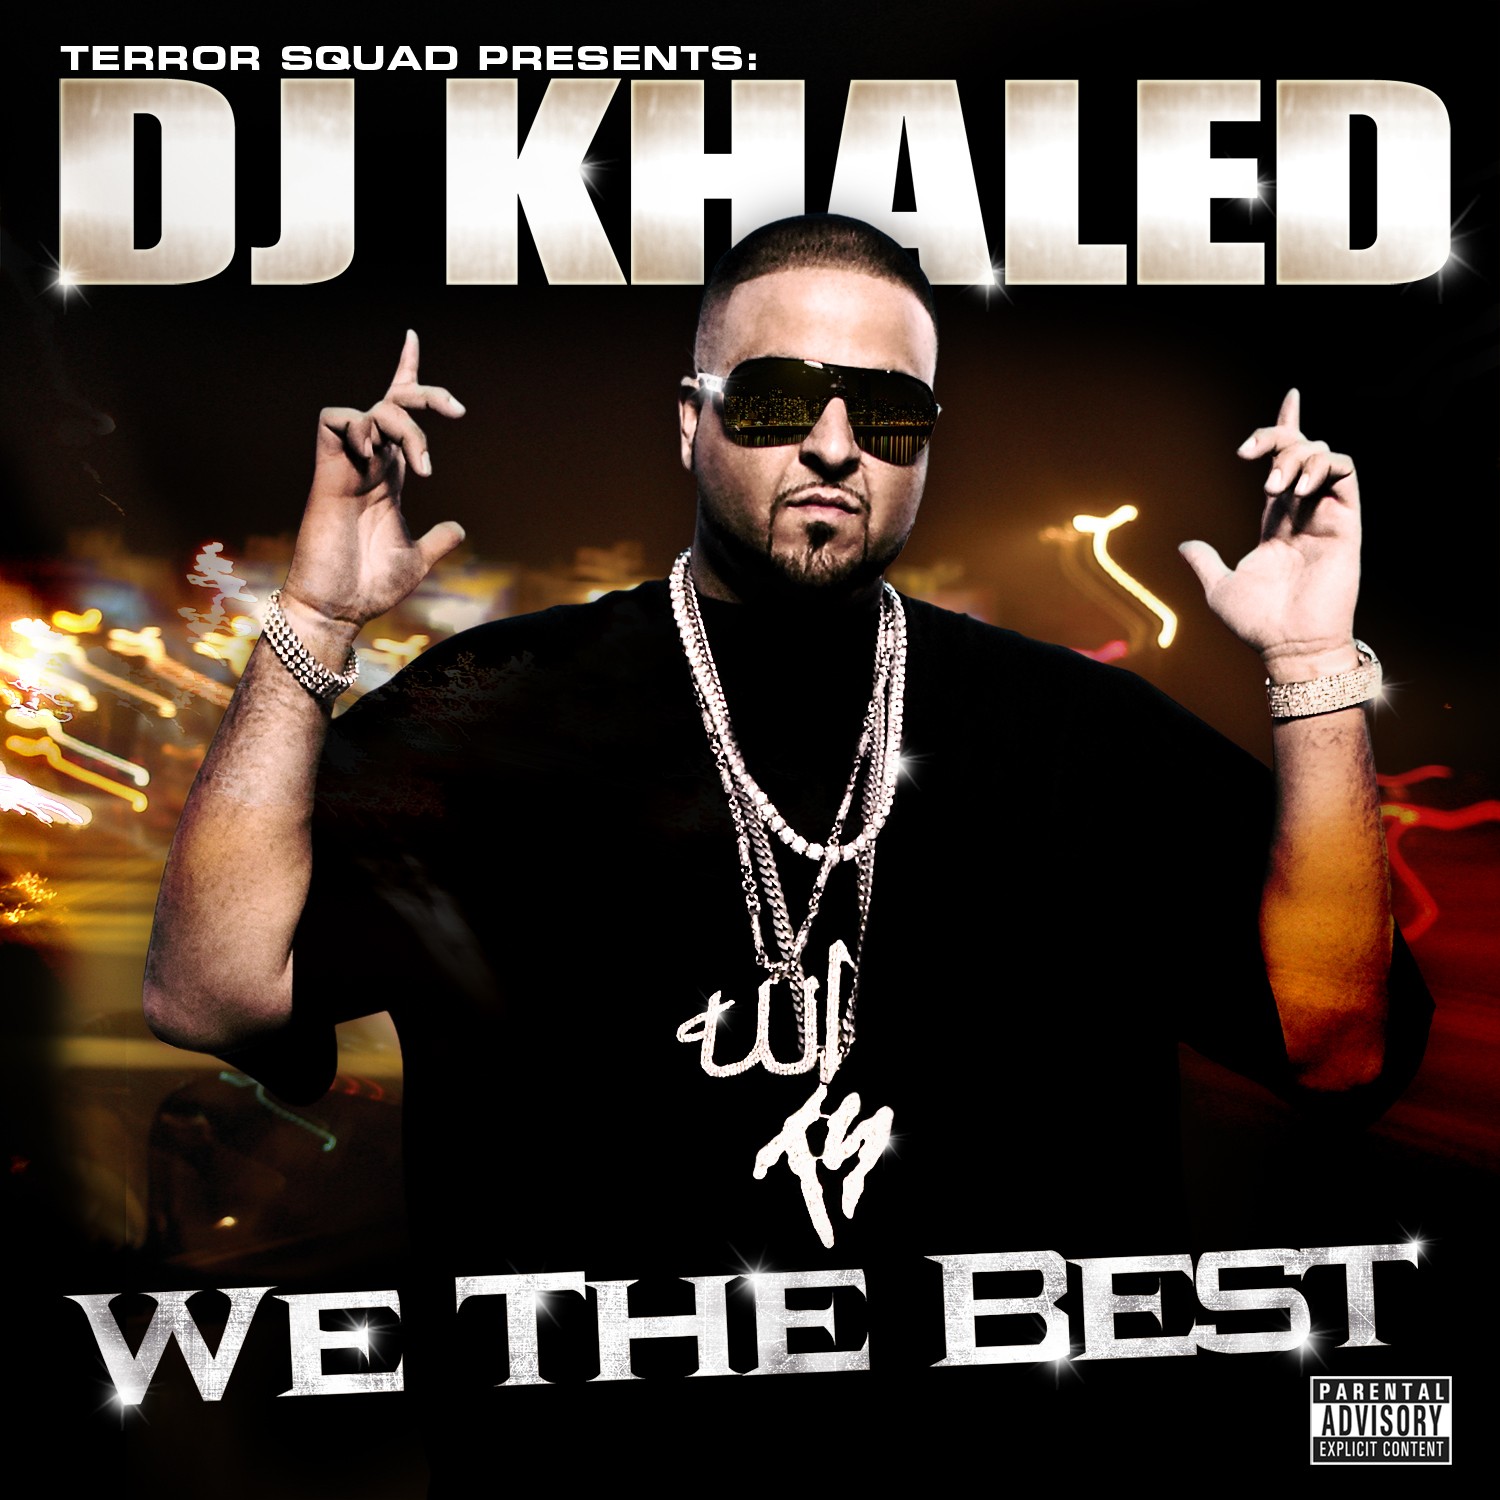 DJ Khaled - Discografia 2006 - 2012 (6 Albumes 320Kbps) (Estados Unidos) ~ Rap Under ...1500 x 1500